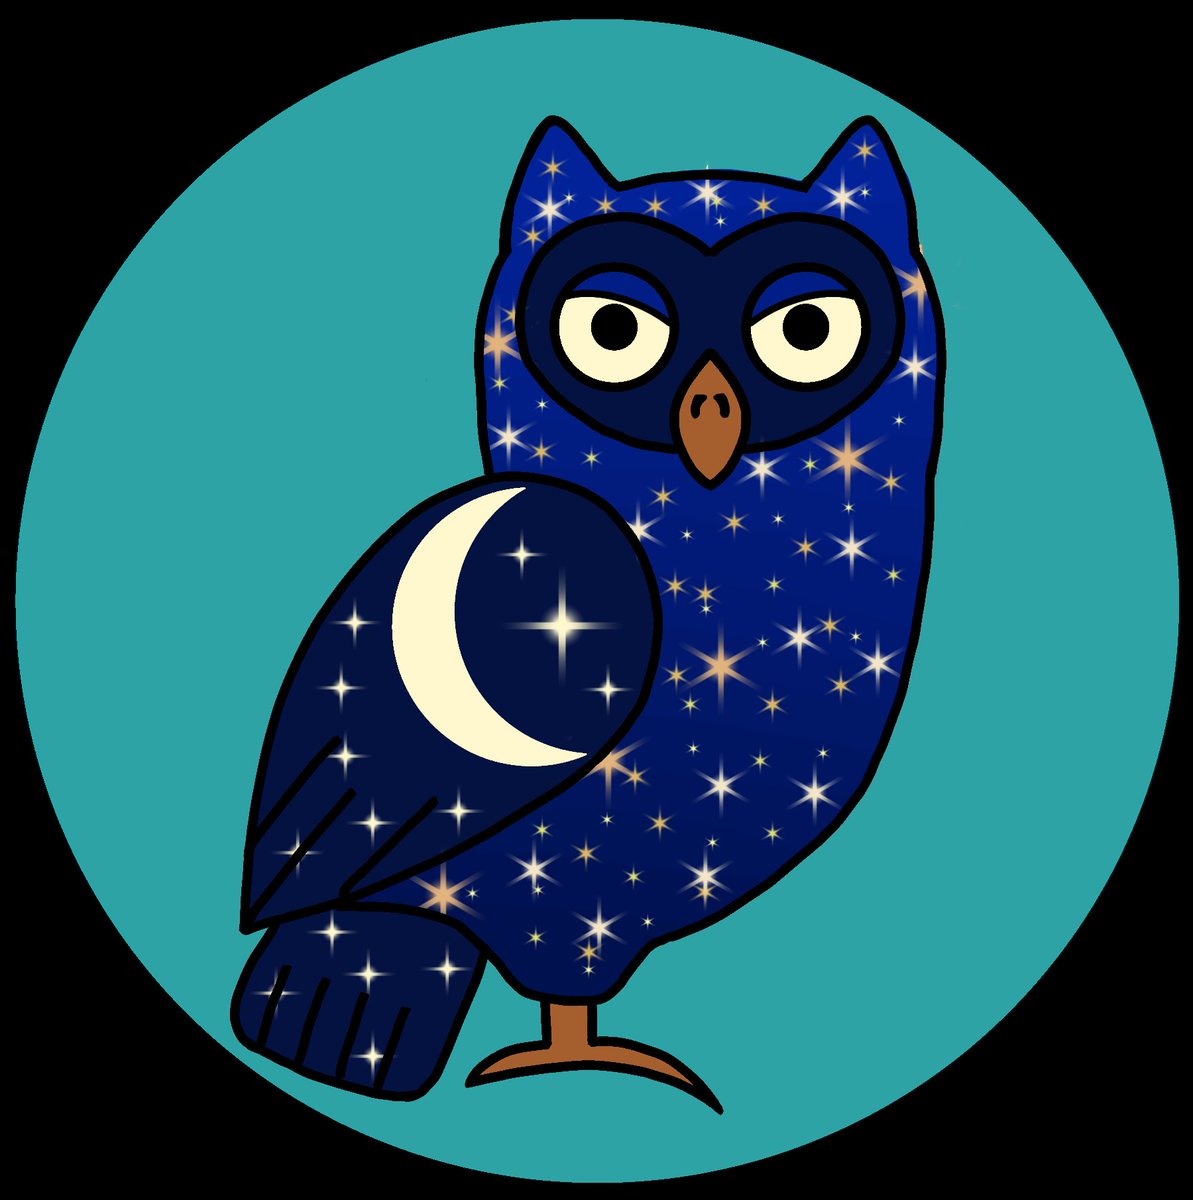 Twoo - Early bird and Night owl.
#owls #originalart